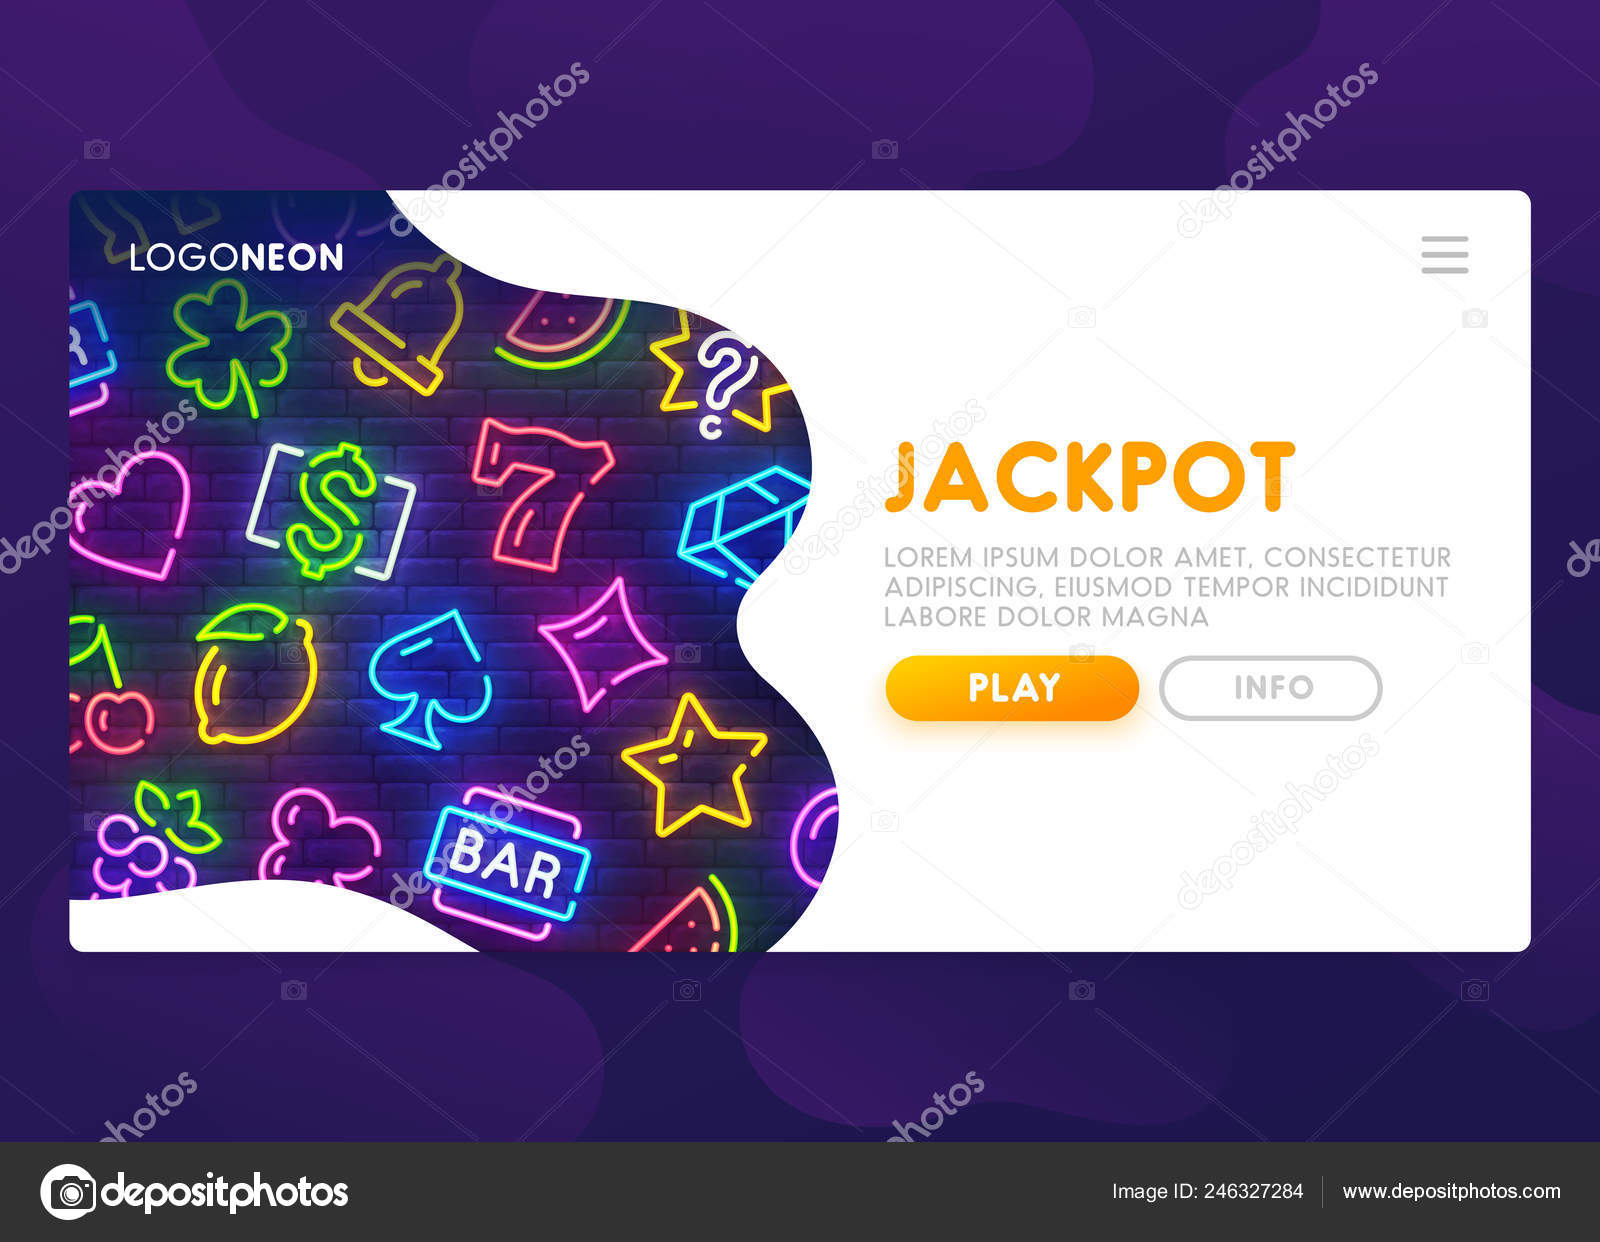 Азартные игры бесплатно онлайн рулетка